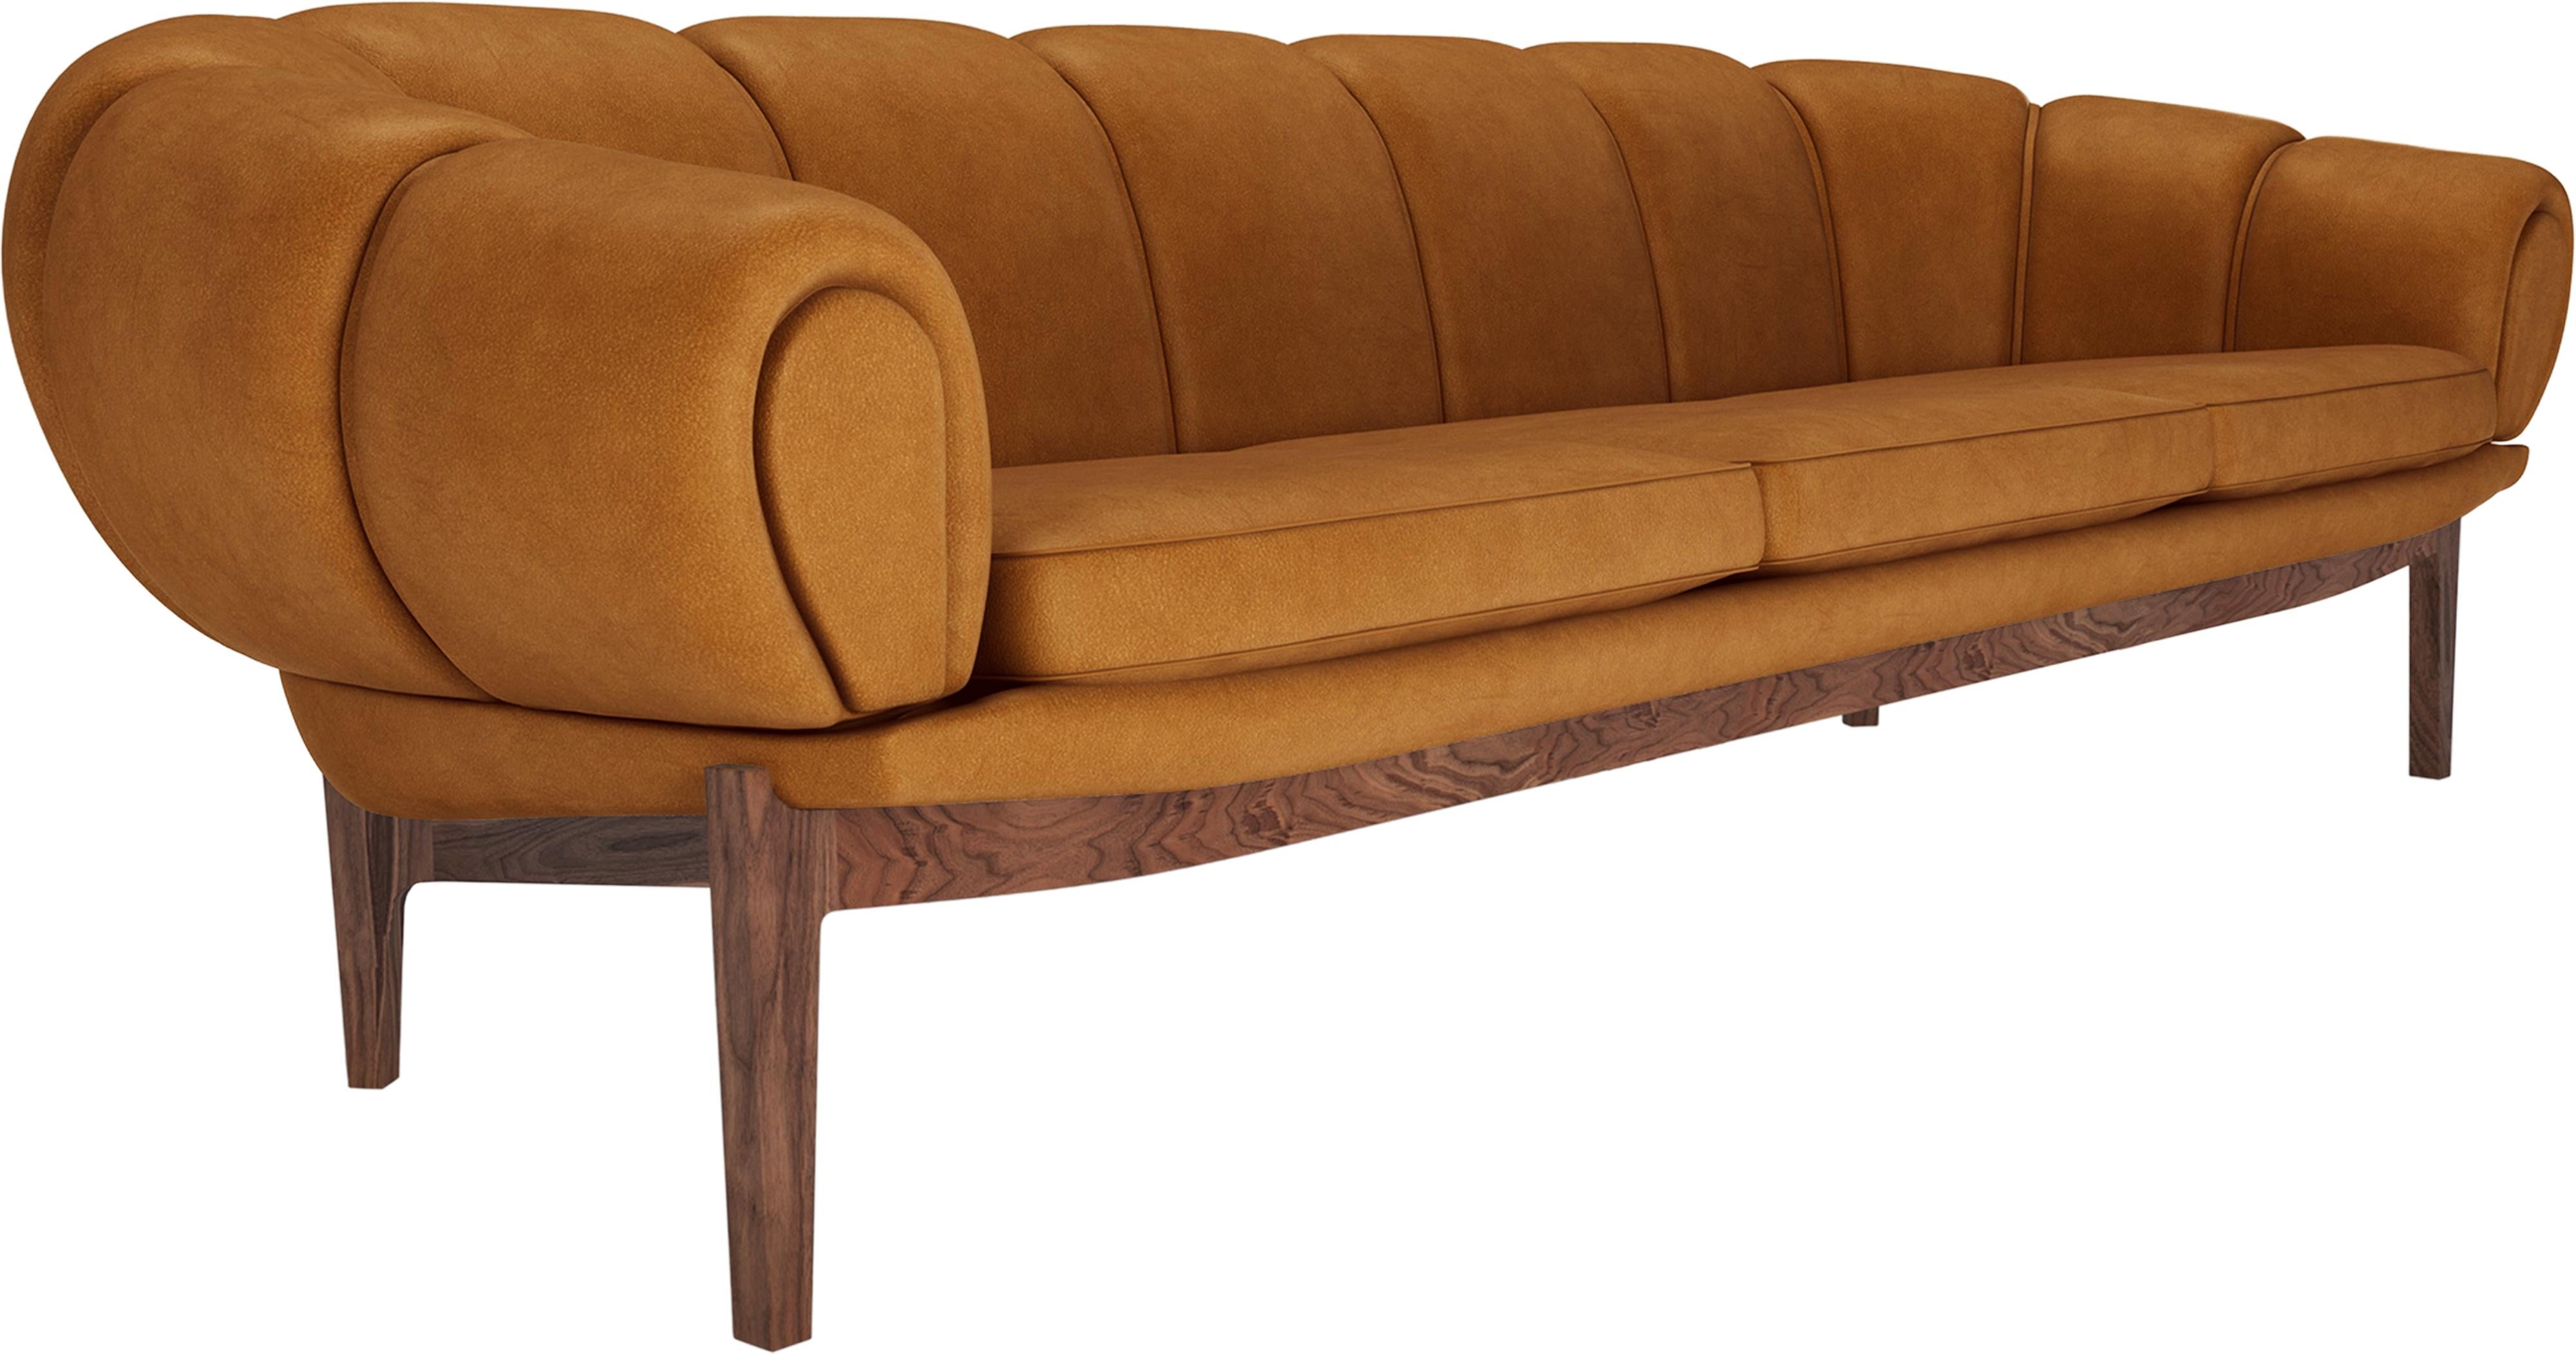 Leather 'Croissant' Sofa by Illum Wikkelsø for Gubi with Oak Legs For Sale 7